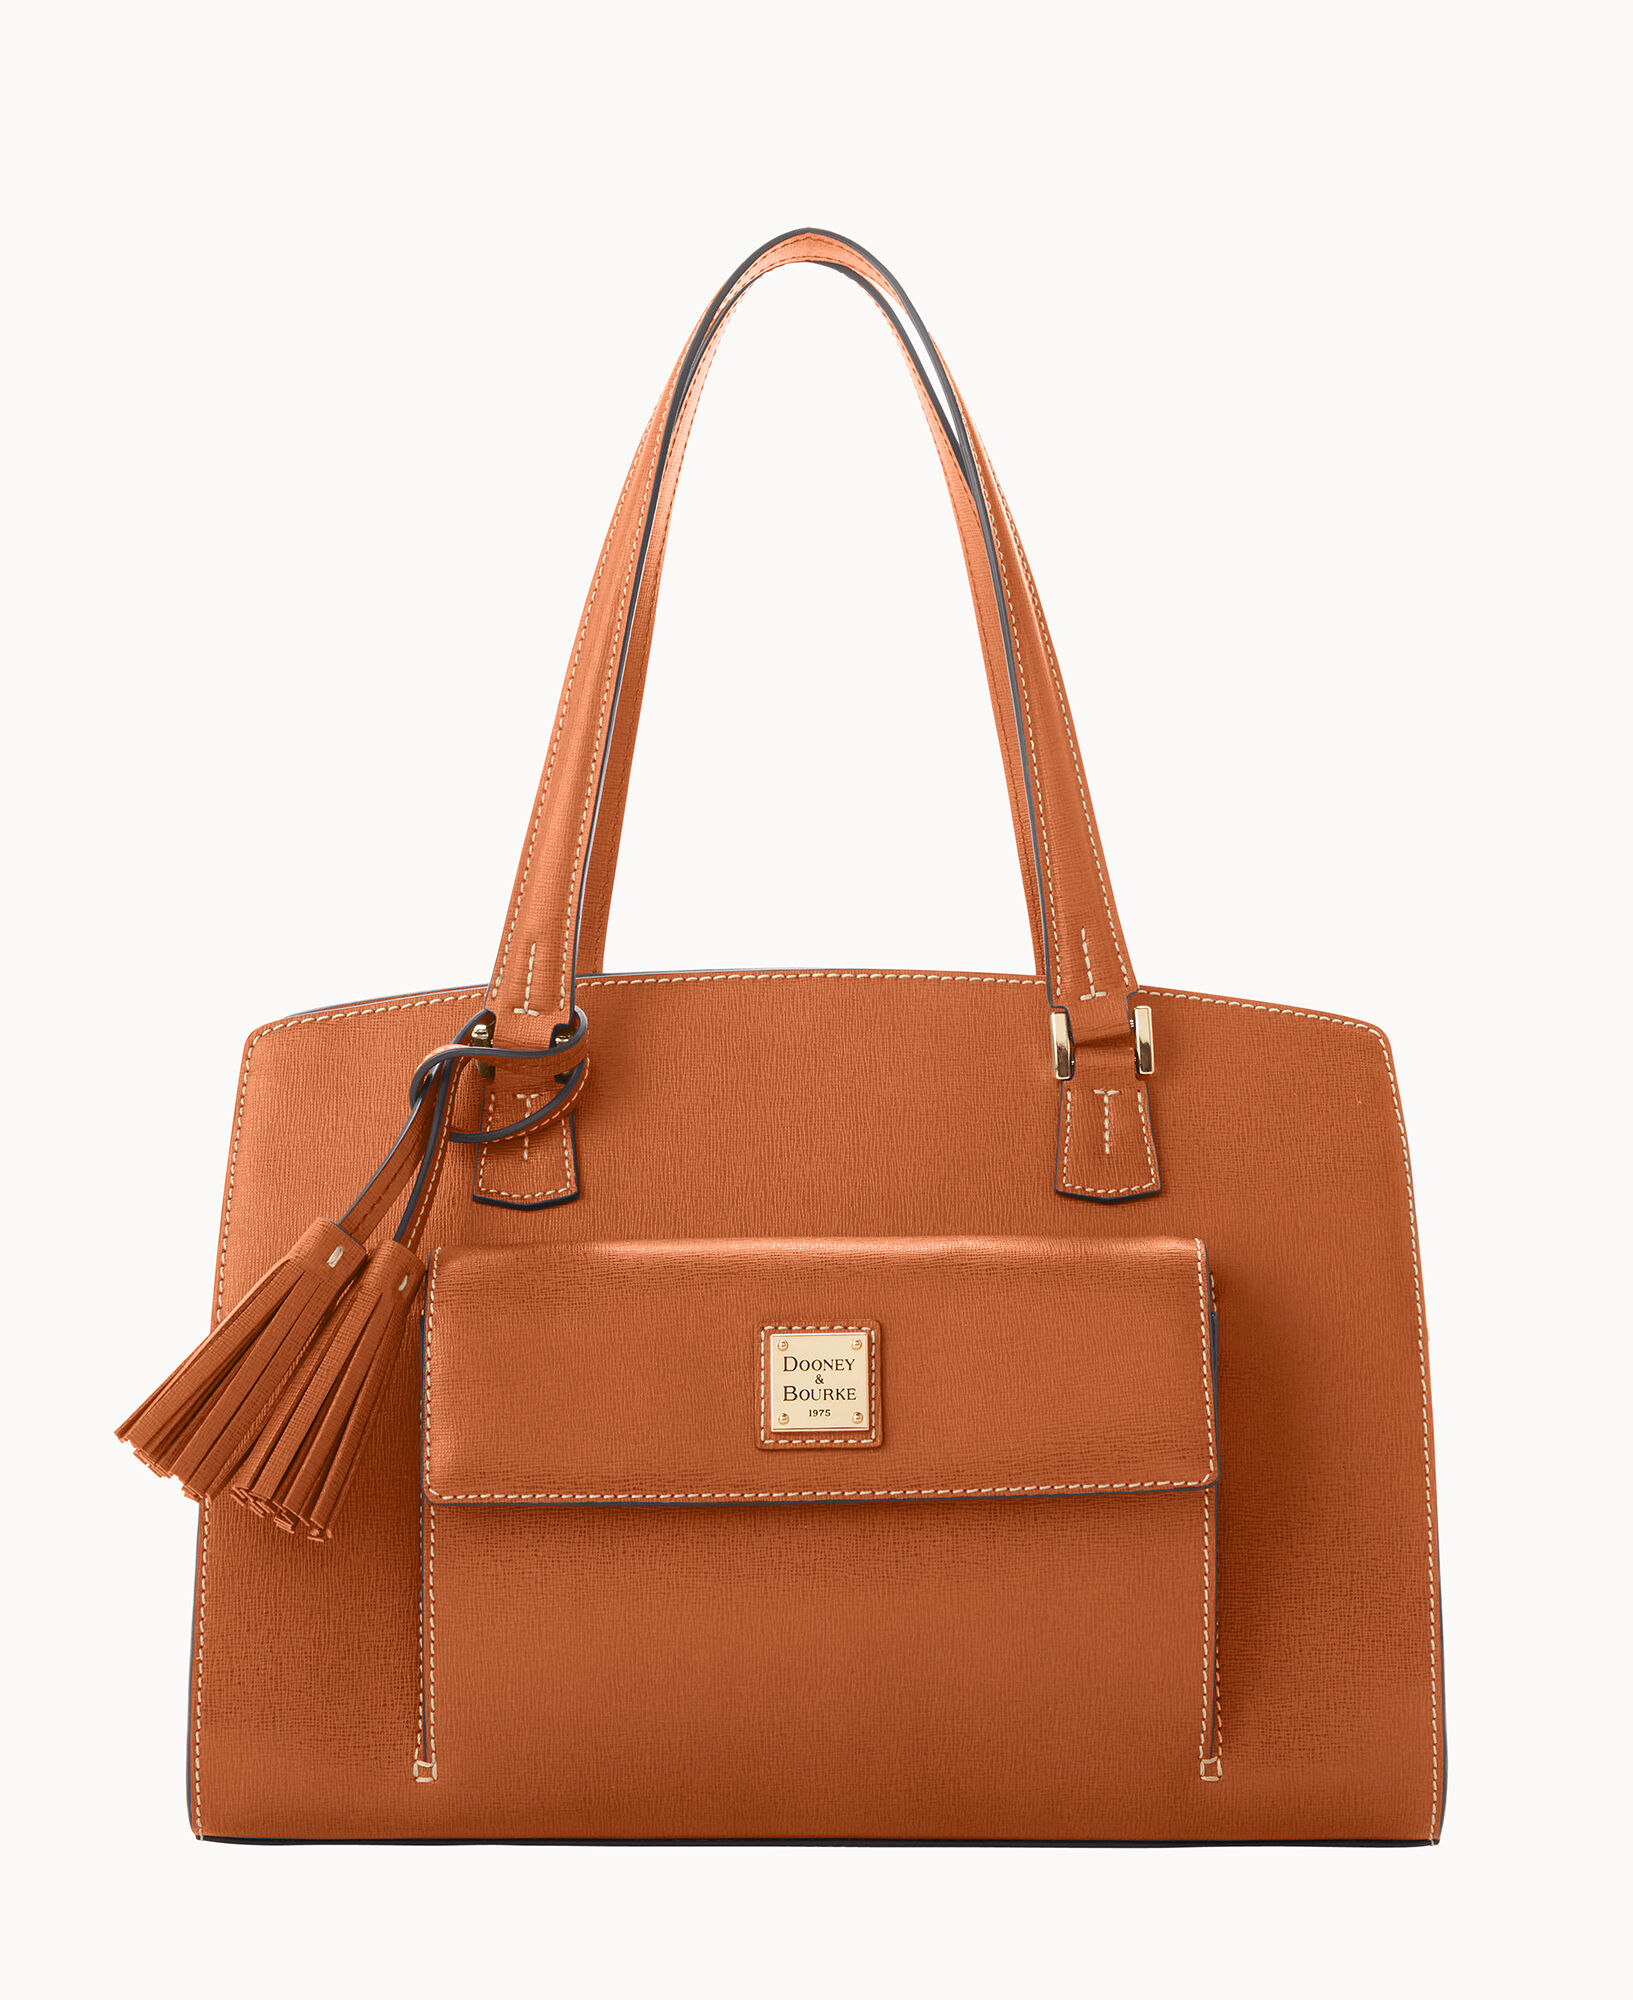 Dooney & Bourke Handbag, Saffiano Hobo Shoulder Bag